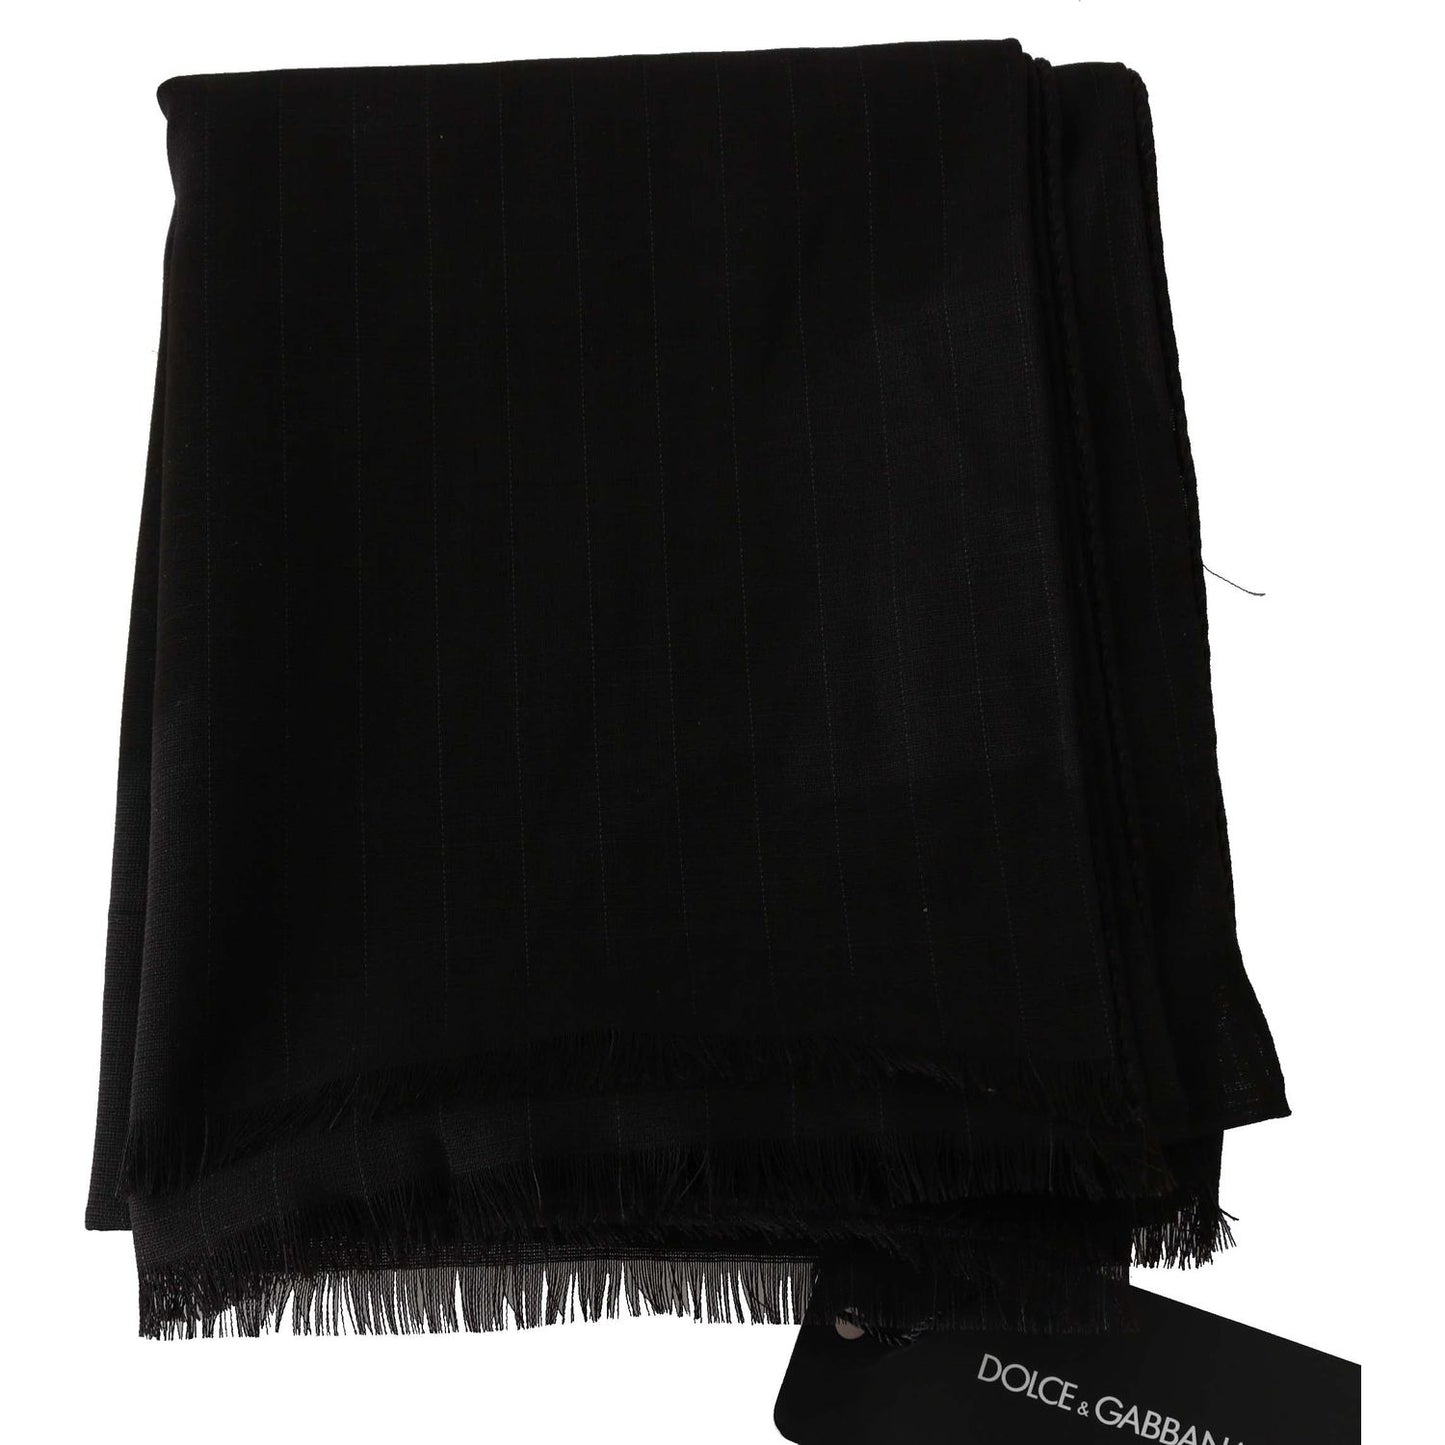 Dolce & Gabbana Elegant Striped Wool Men's Scarf brown-virgin-wool-striped-pattern-wrap-scarf Wool Wrap Shawls IMG_9955-1.jpg